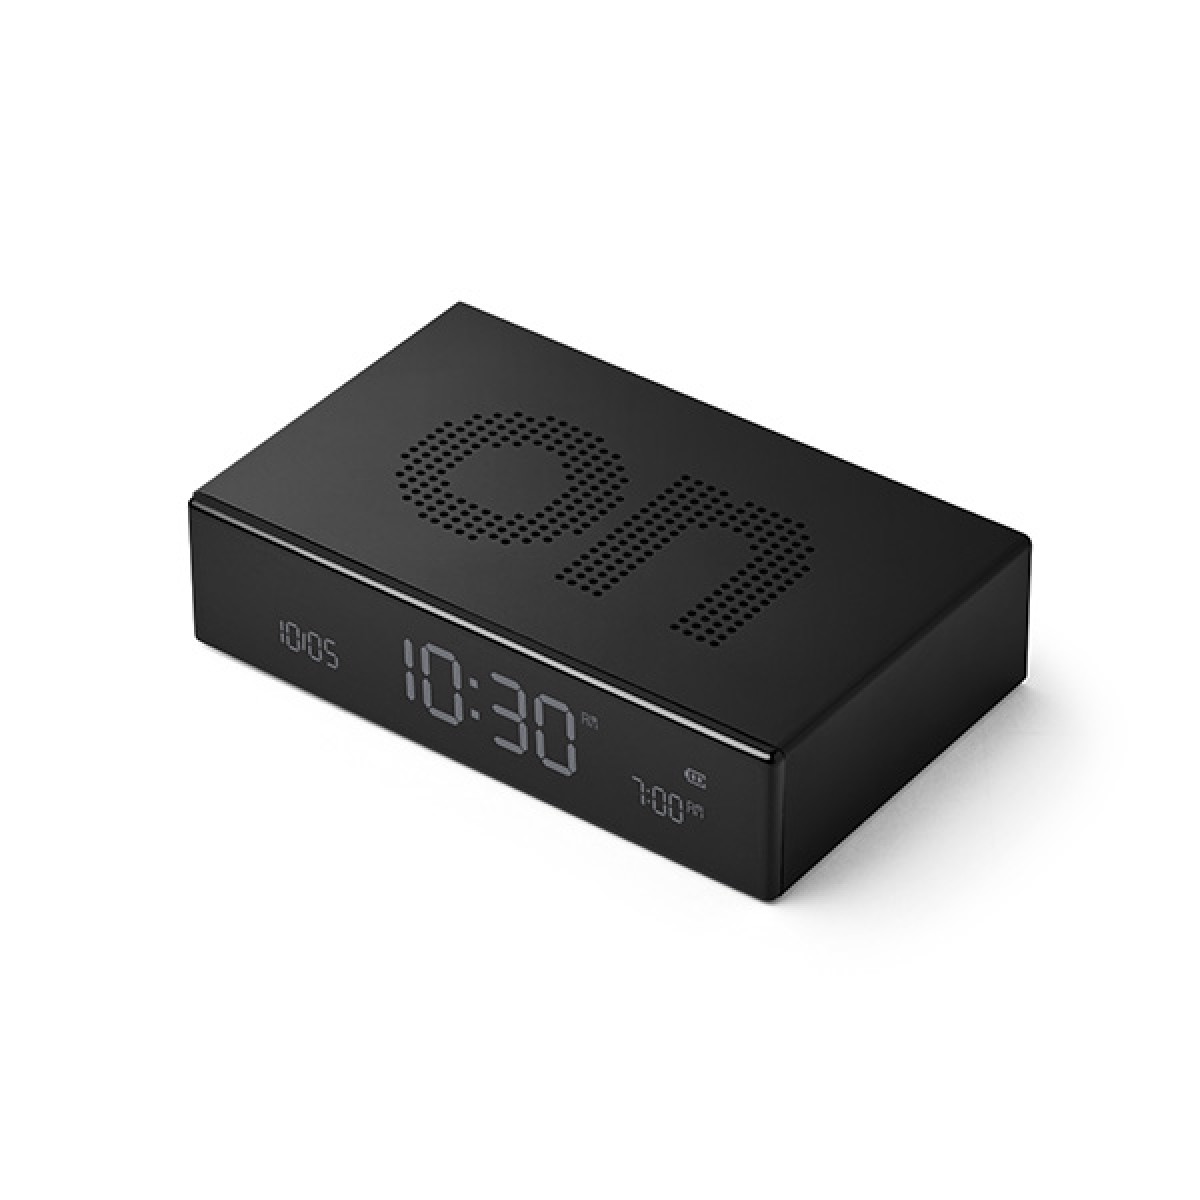 Lexon - Flip Premium - Reversible LCD alarm clock - Black